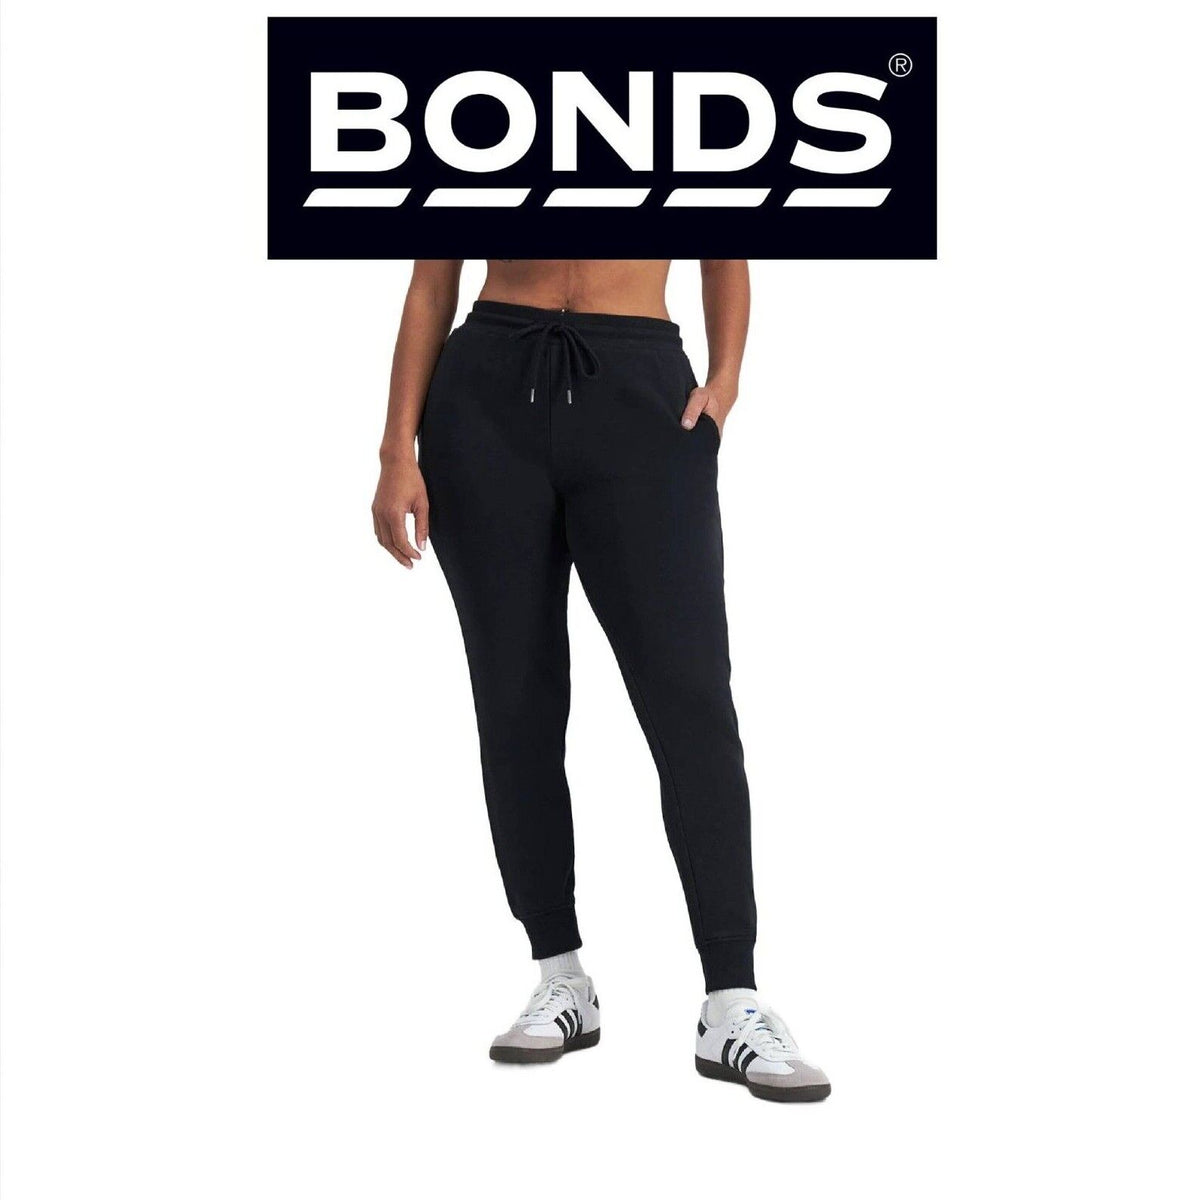 Bonds Womens Originals Skinny Trackie Pants Stretchy Flattering Slim Fit CTBFI